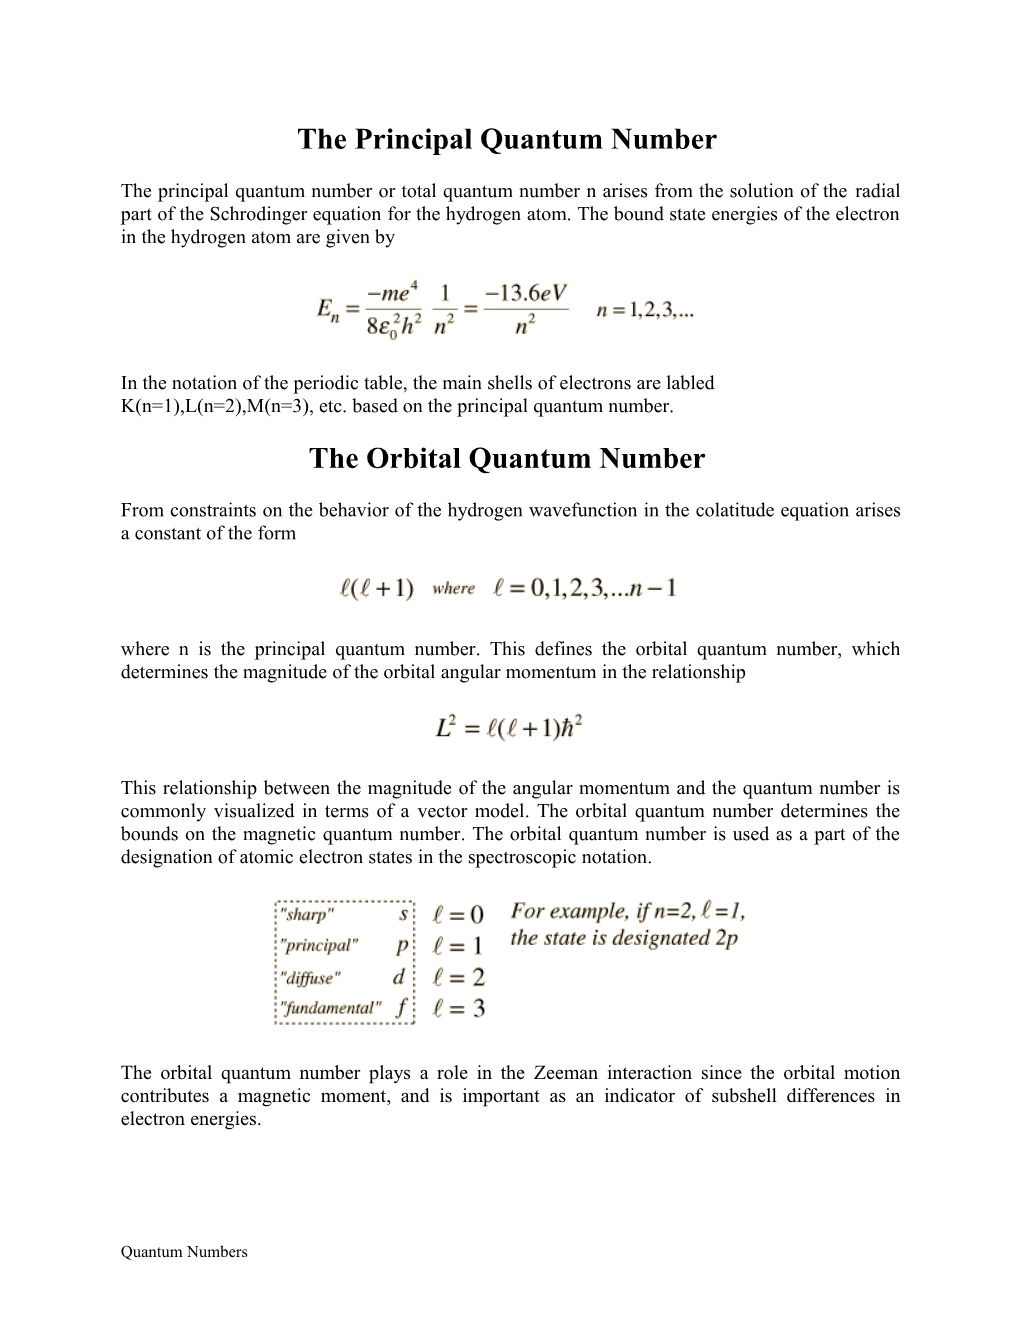 The Principal Quantum Number